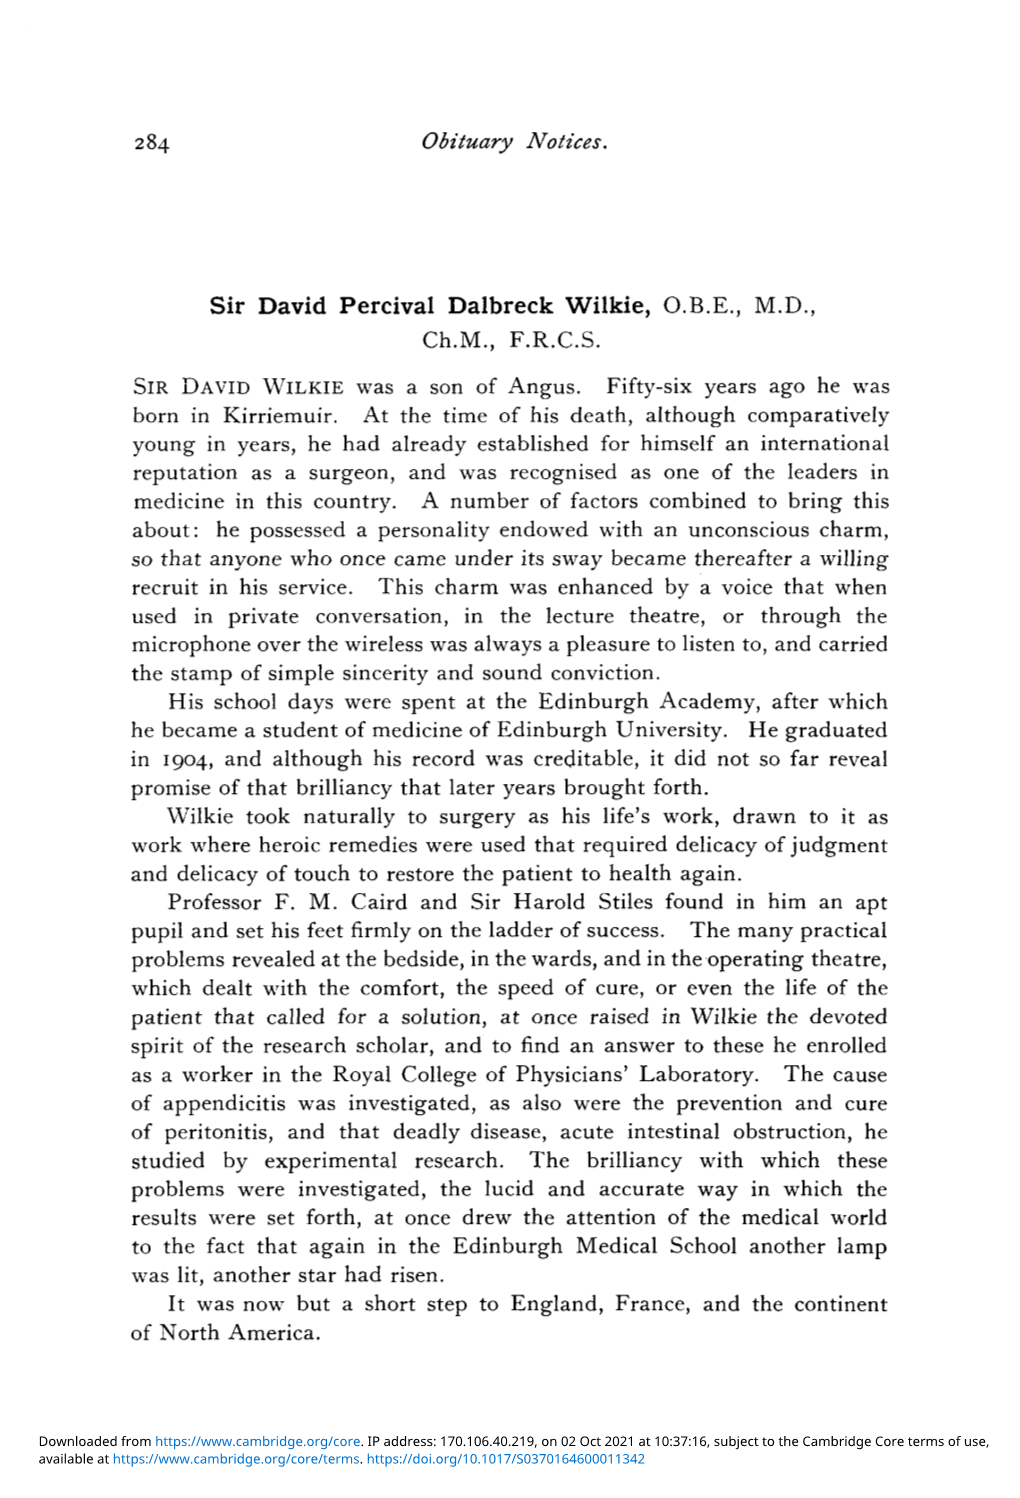 Sir David Percival Dalbreck Wilkie, O.B.E., M.D., Ch.M., F.R.C.S